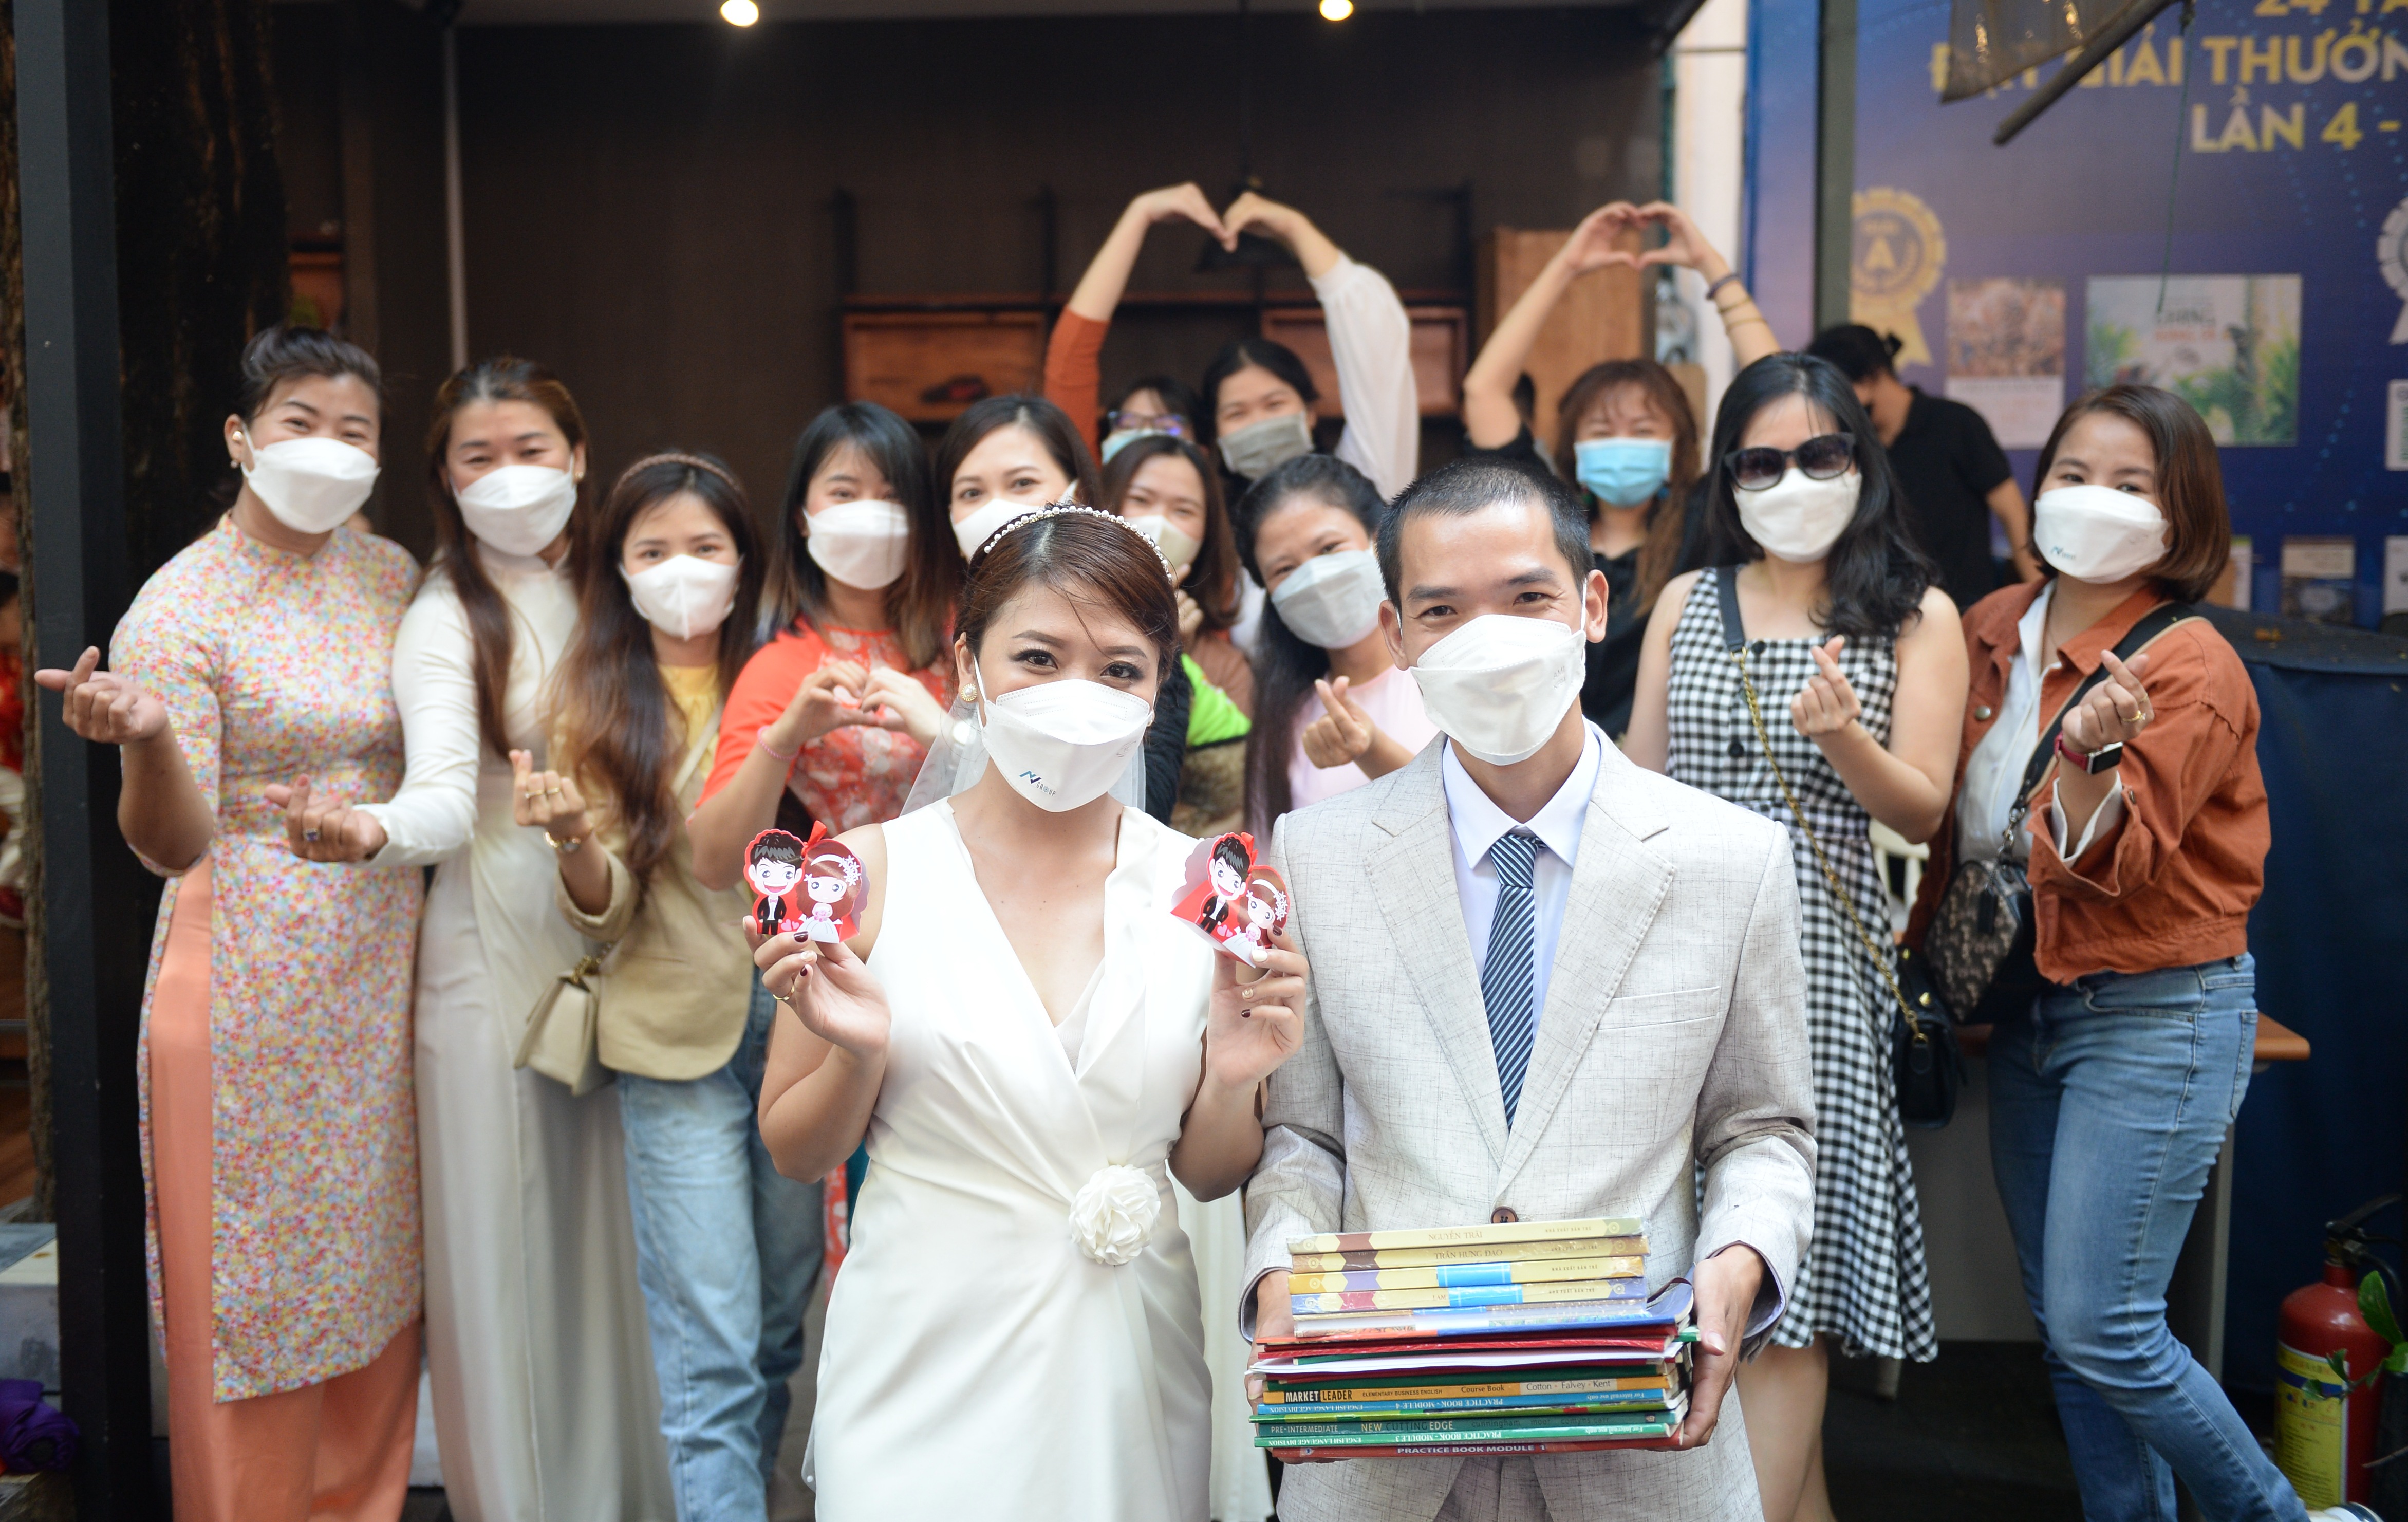 Couple celebrates low-key wedding at Ho Chi Minh City book street